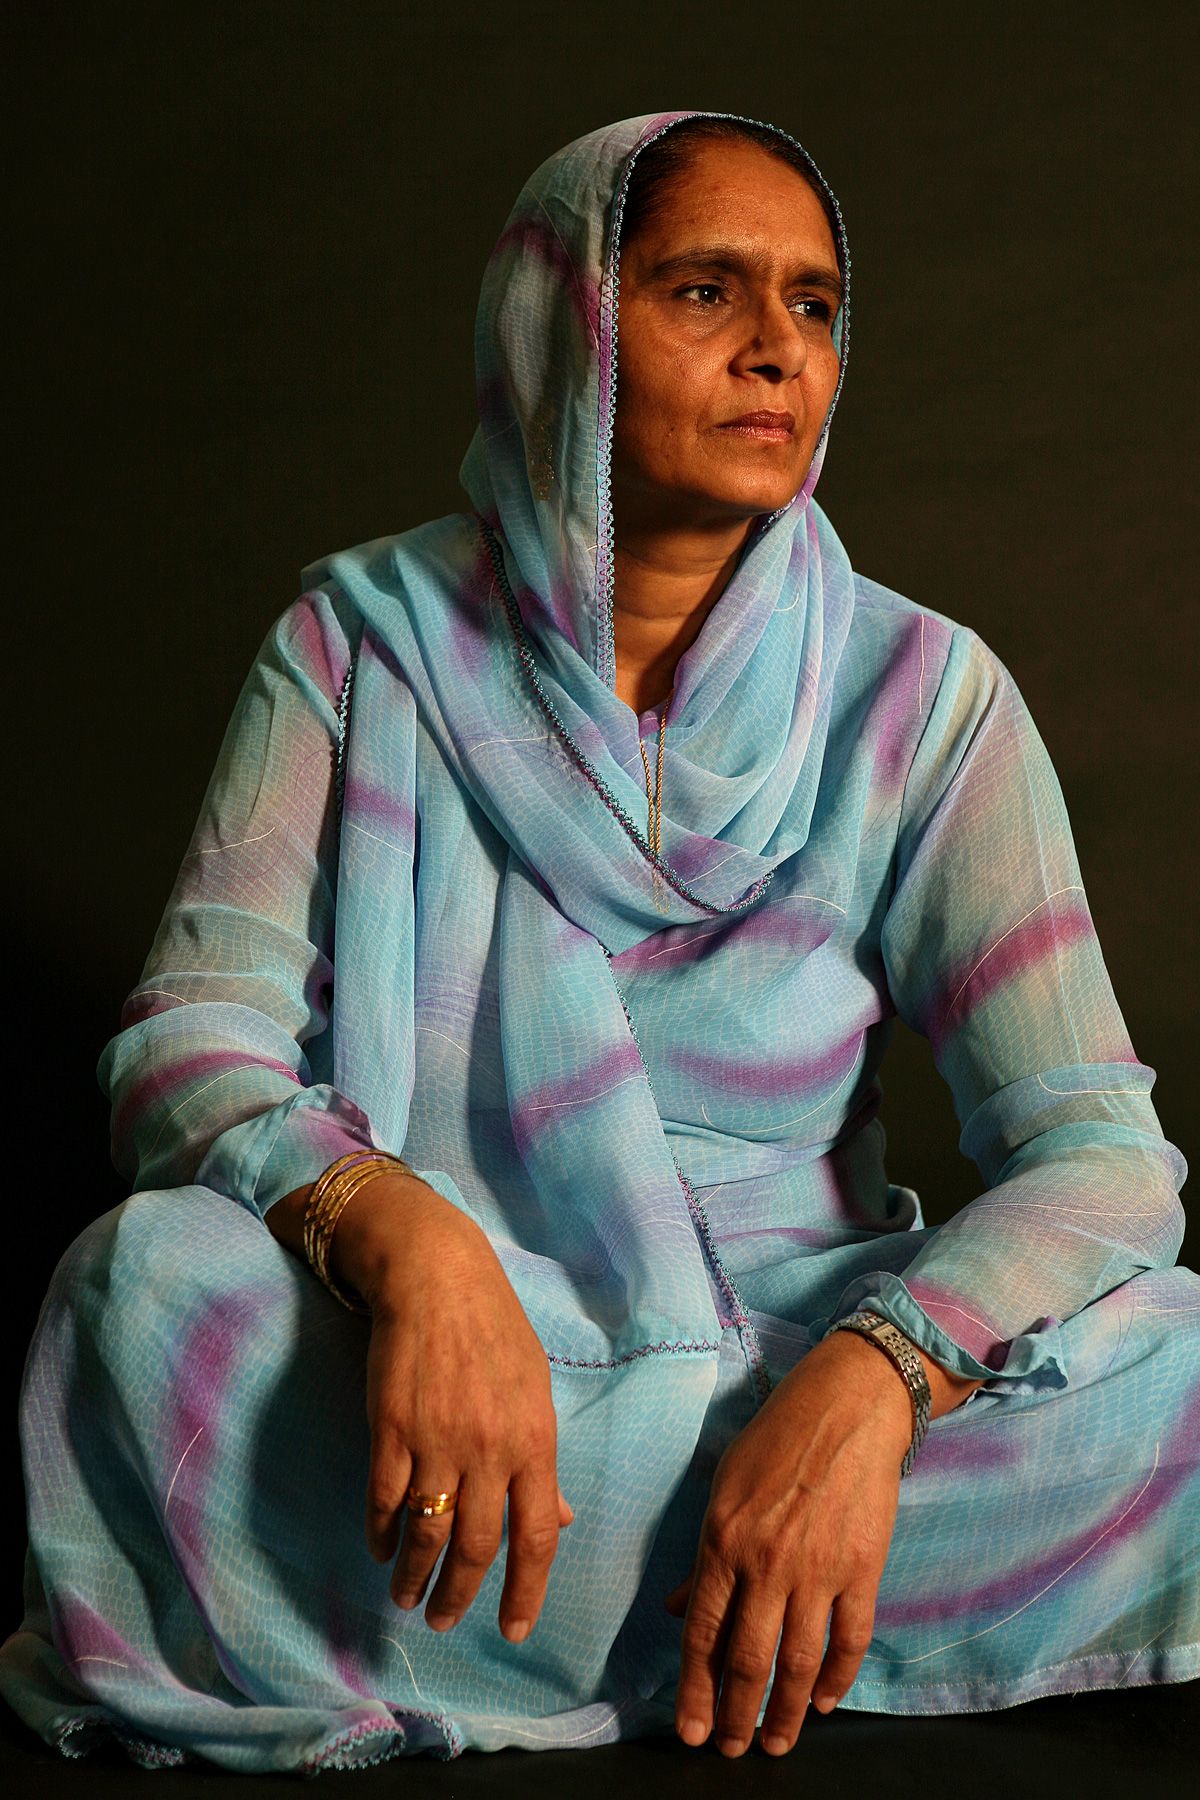 Studio portrait of Pakistani woman